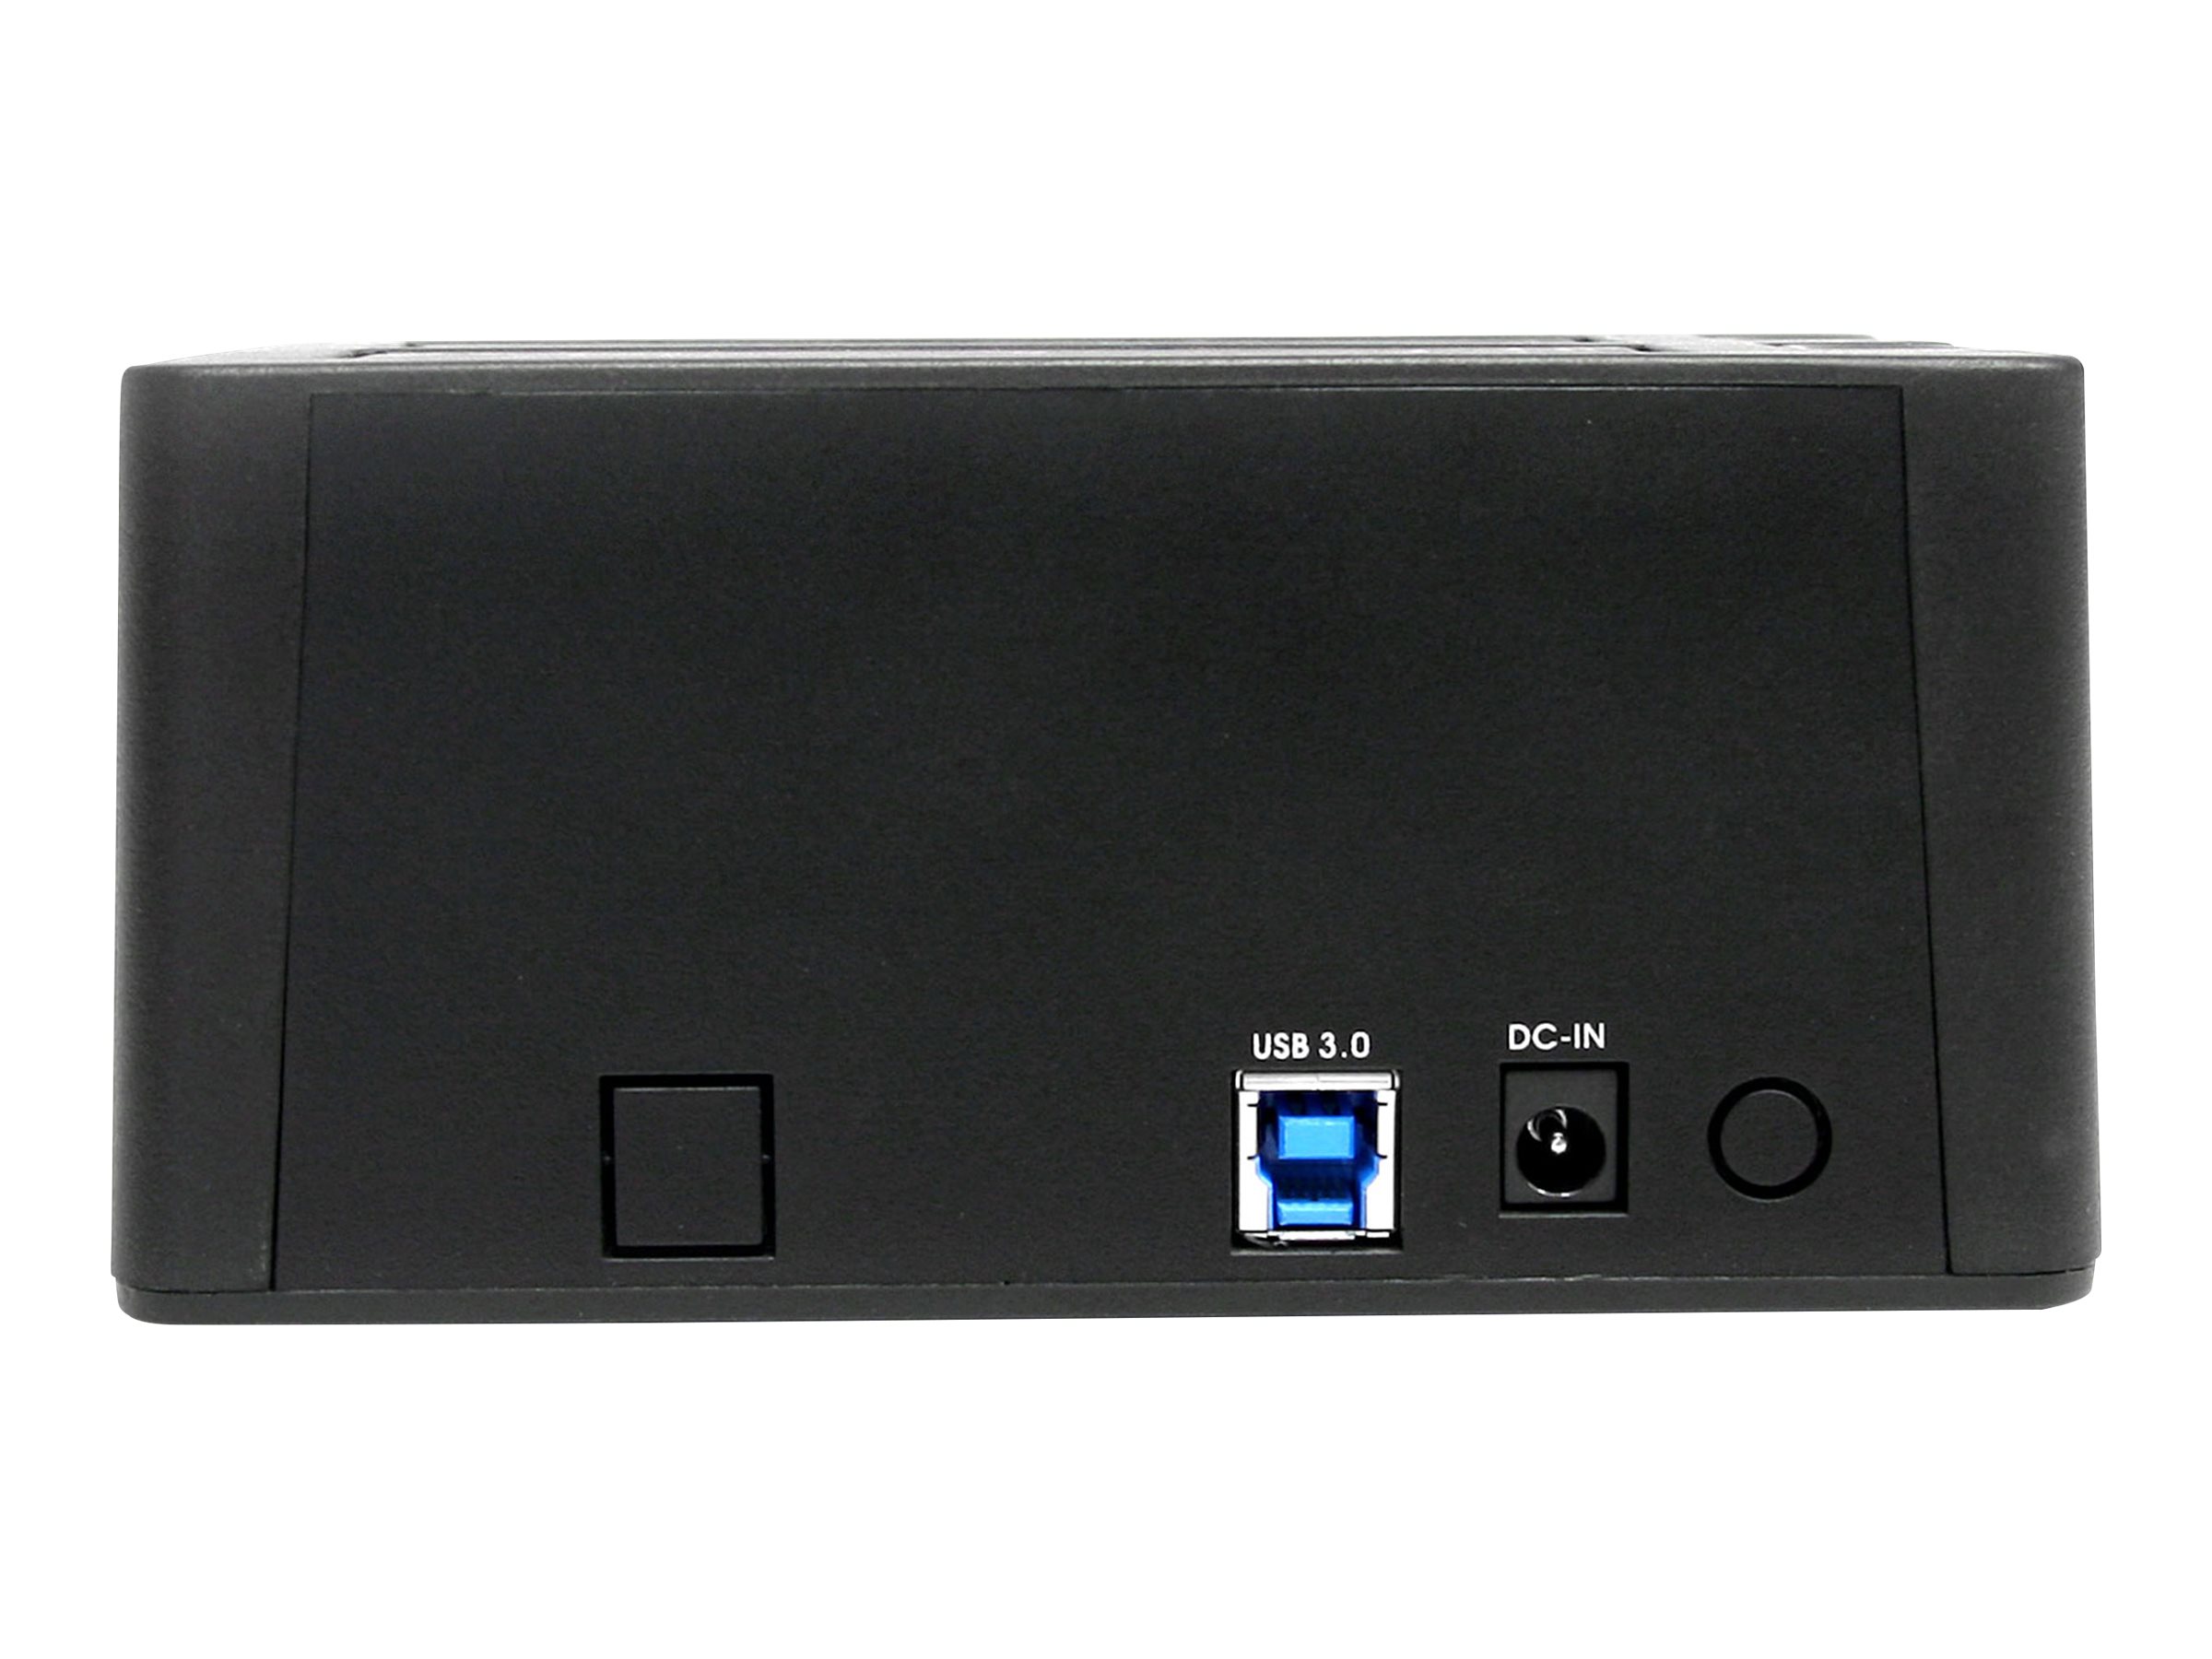 StarTech.com 2-fach USB 3.0 Festplatten Dockingstation mit UASP für 2,5/3,5 SSD / HDD - Serial-ATA USB Dual Bay Dockingstation - Speicher-Controller - 2.5", 3.5" (6.4 cm, 8.9 cm)